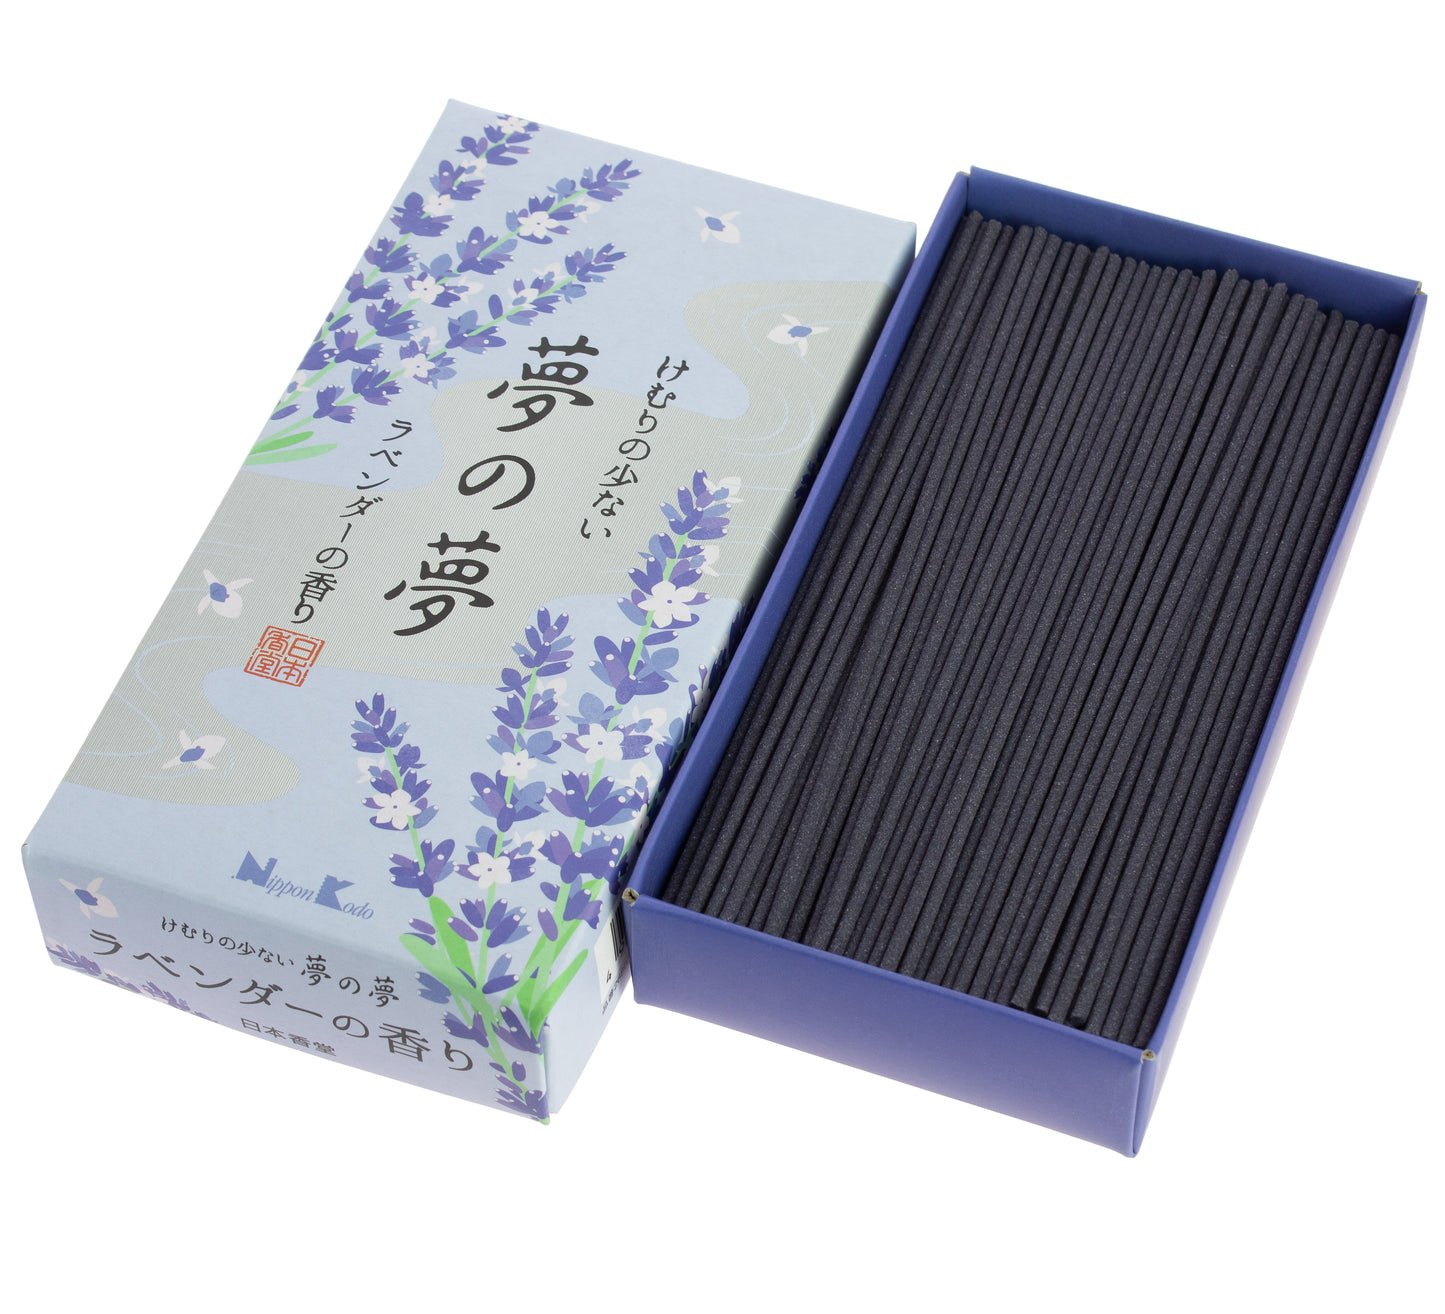 Yume no Yume Incense - Lavender Flower, Large Box